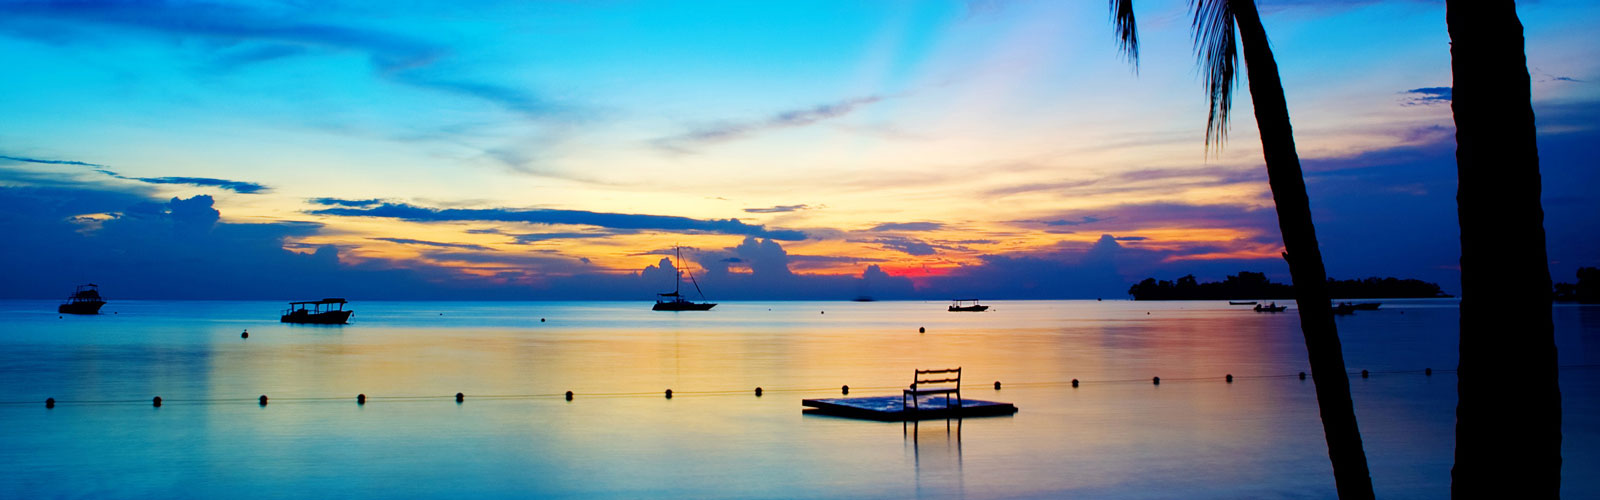 Jamaican bay at sunset